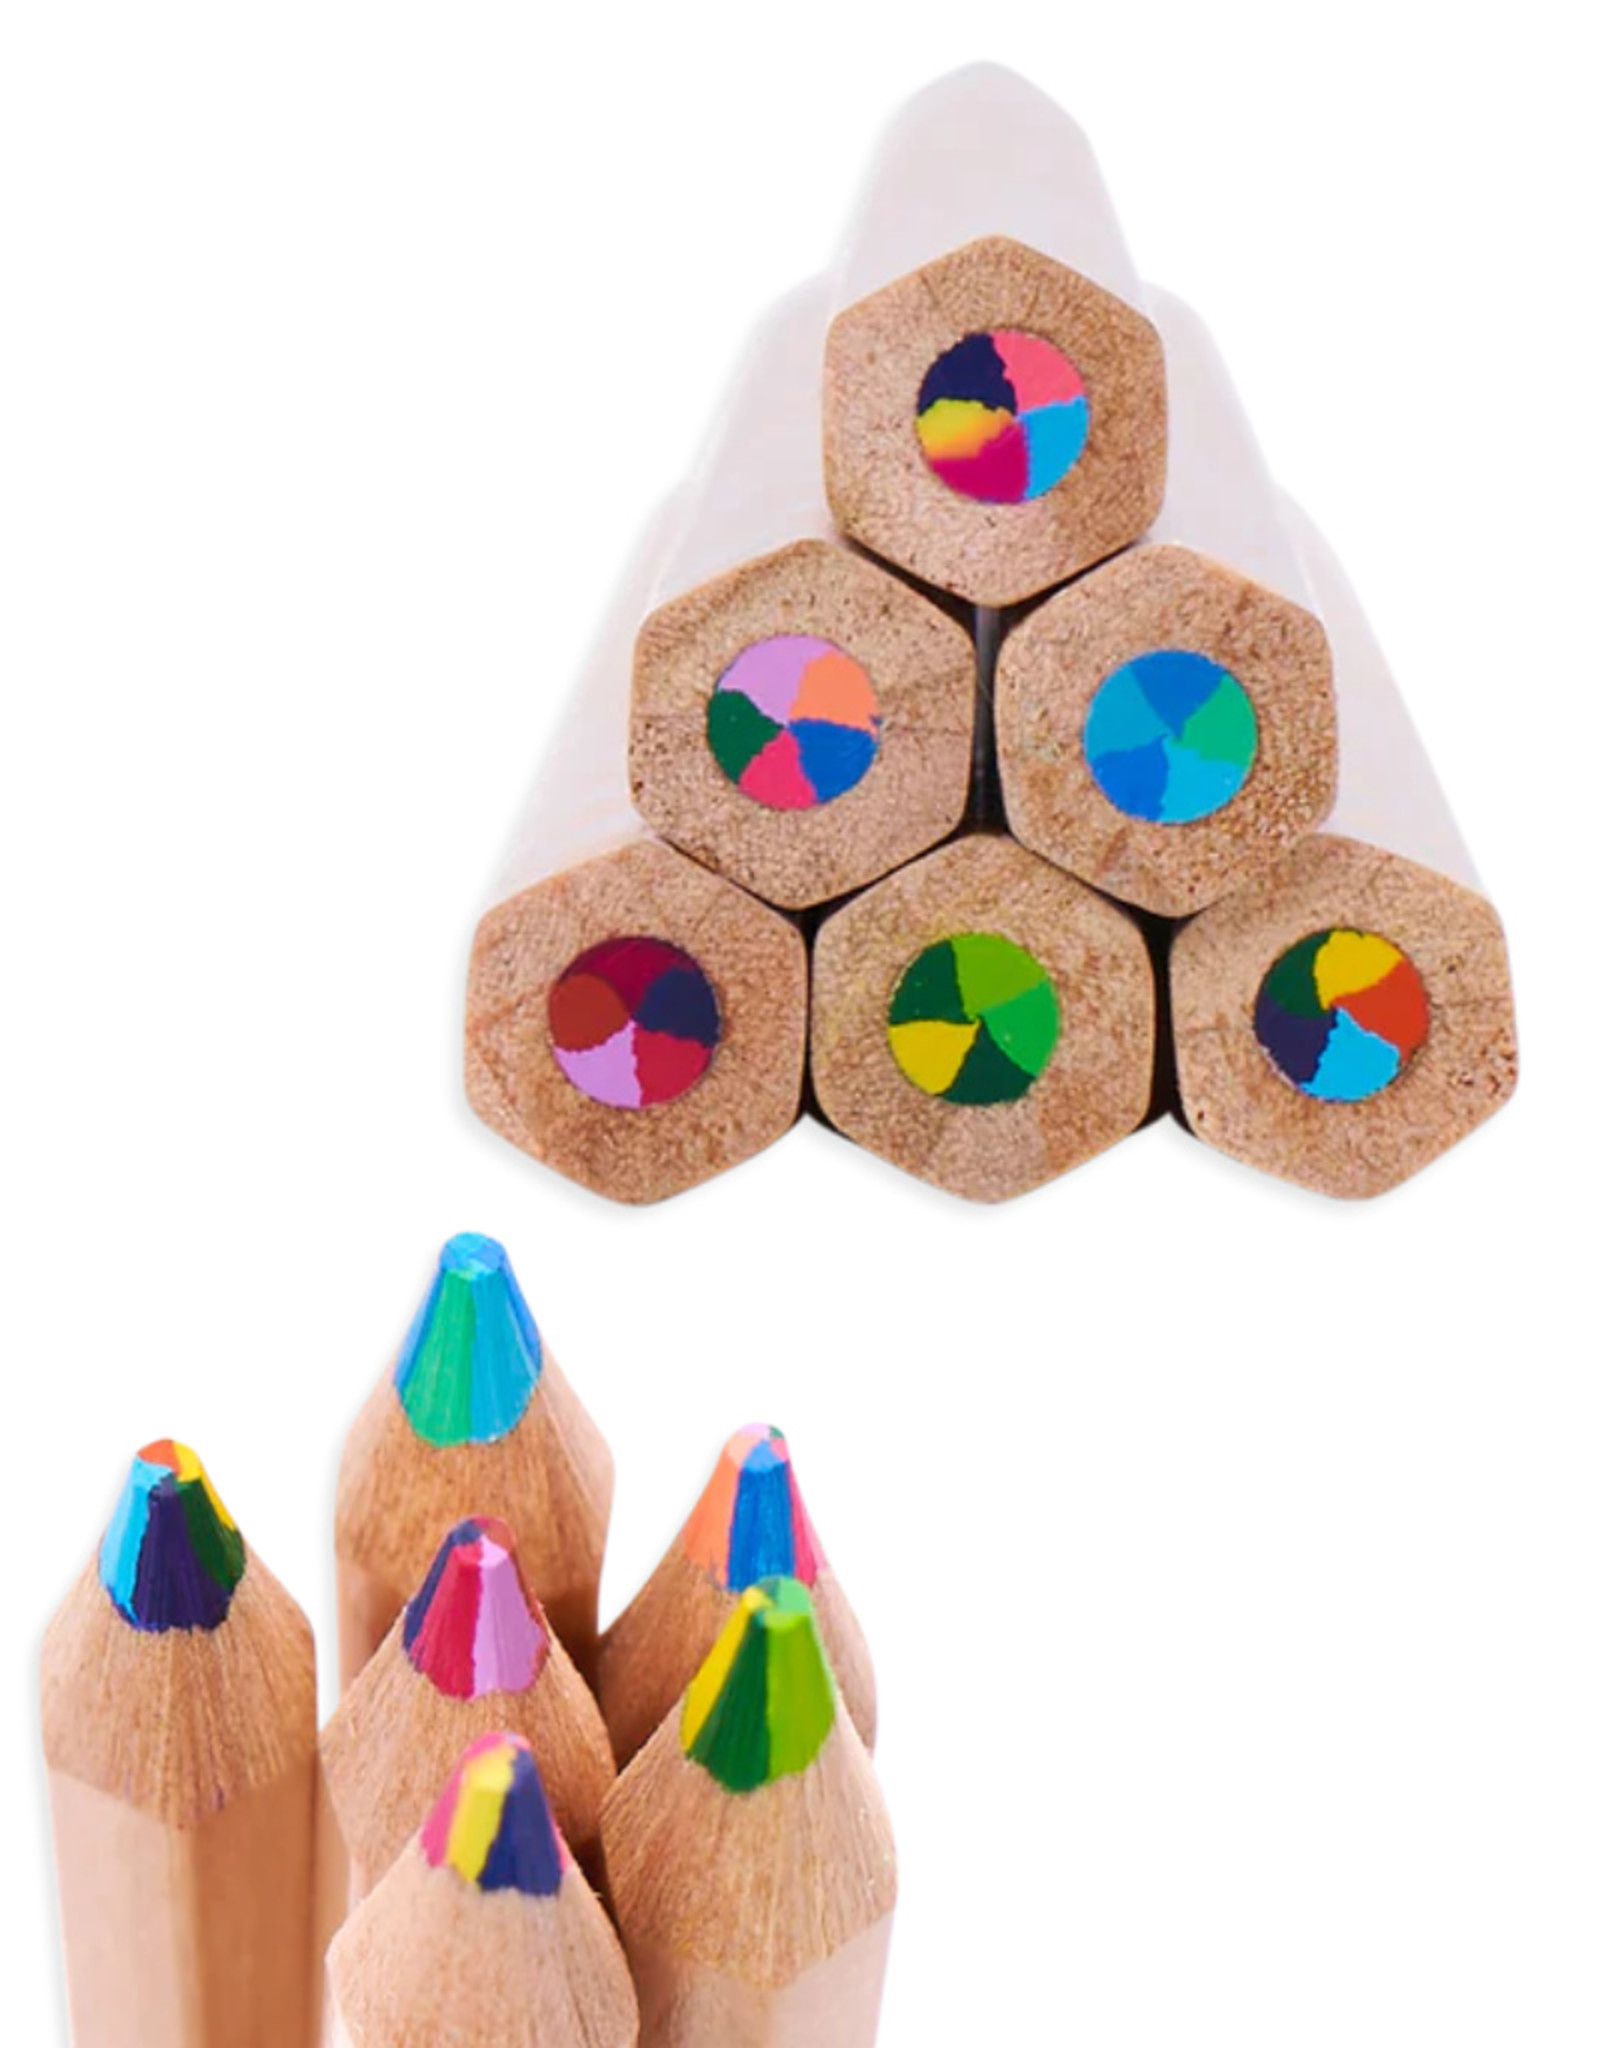 Ooly Kaleidoscope Multi-Colored Pencils  - Set of 6